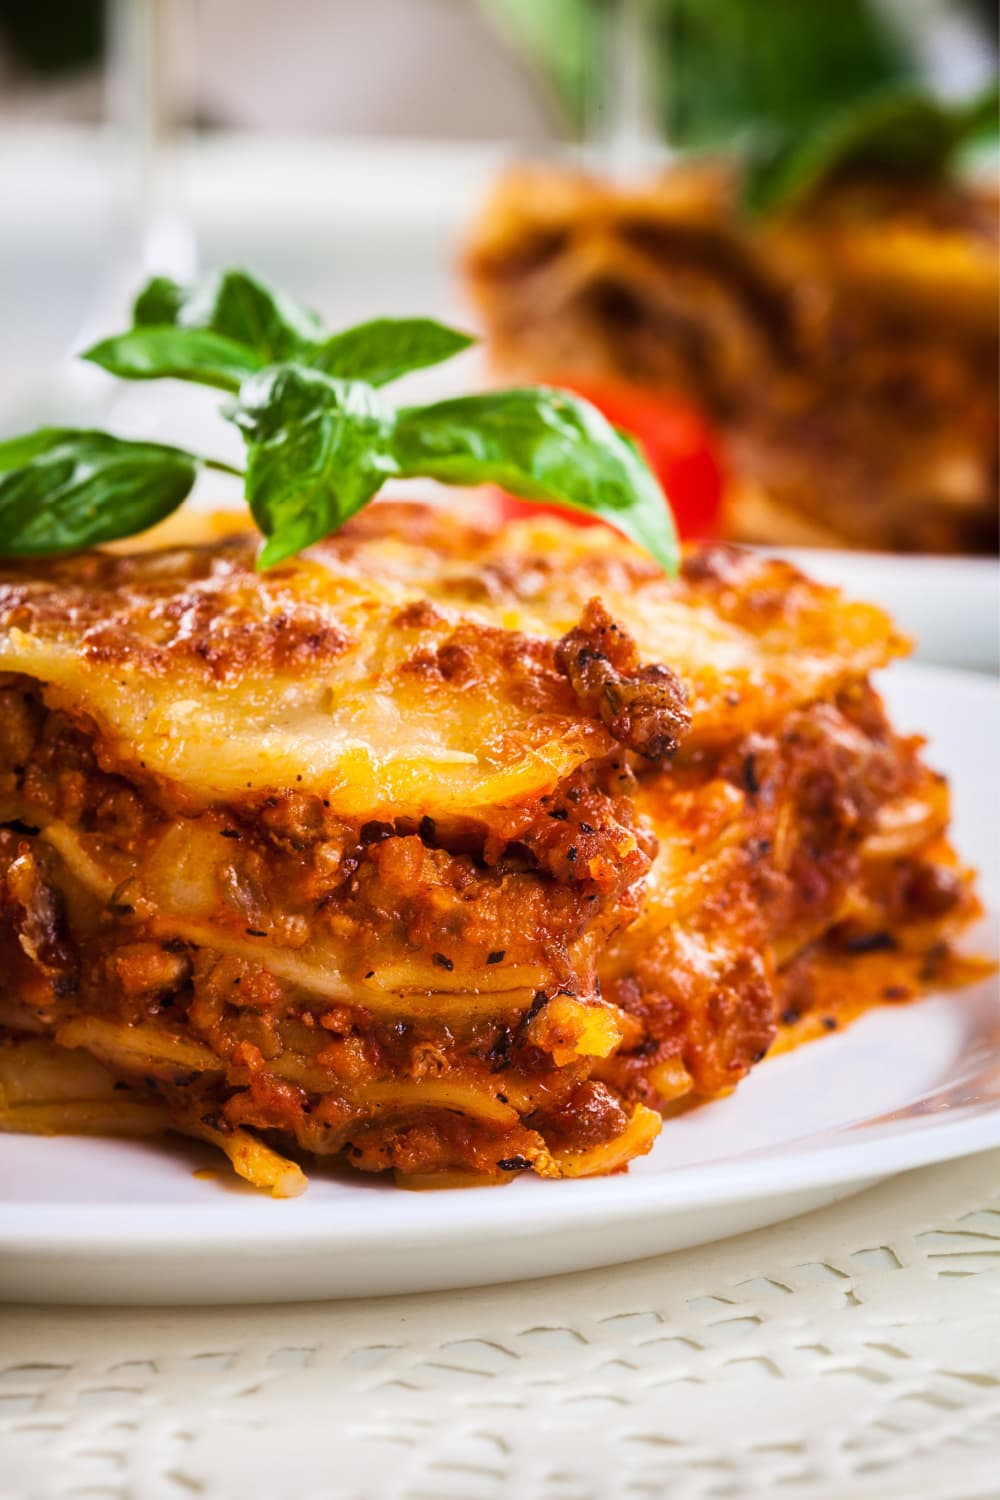 i-cottage cheese lasagna